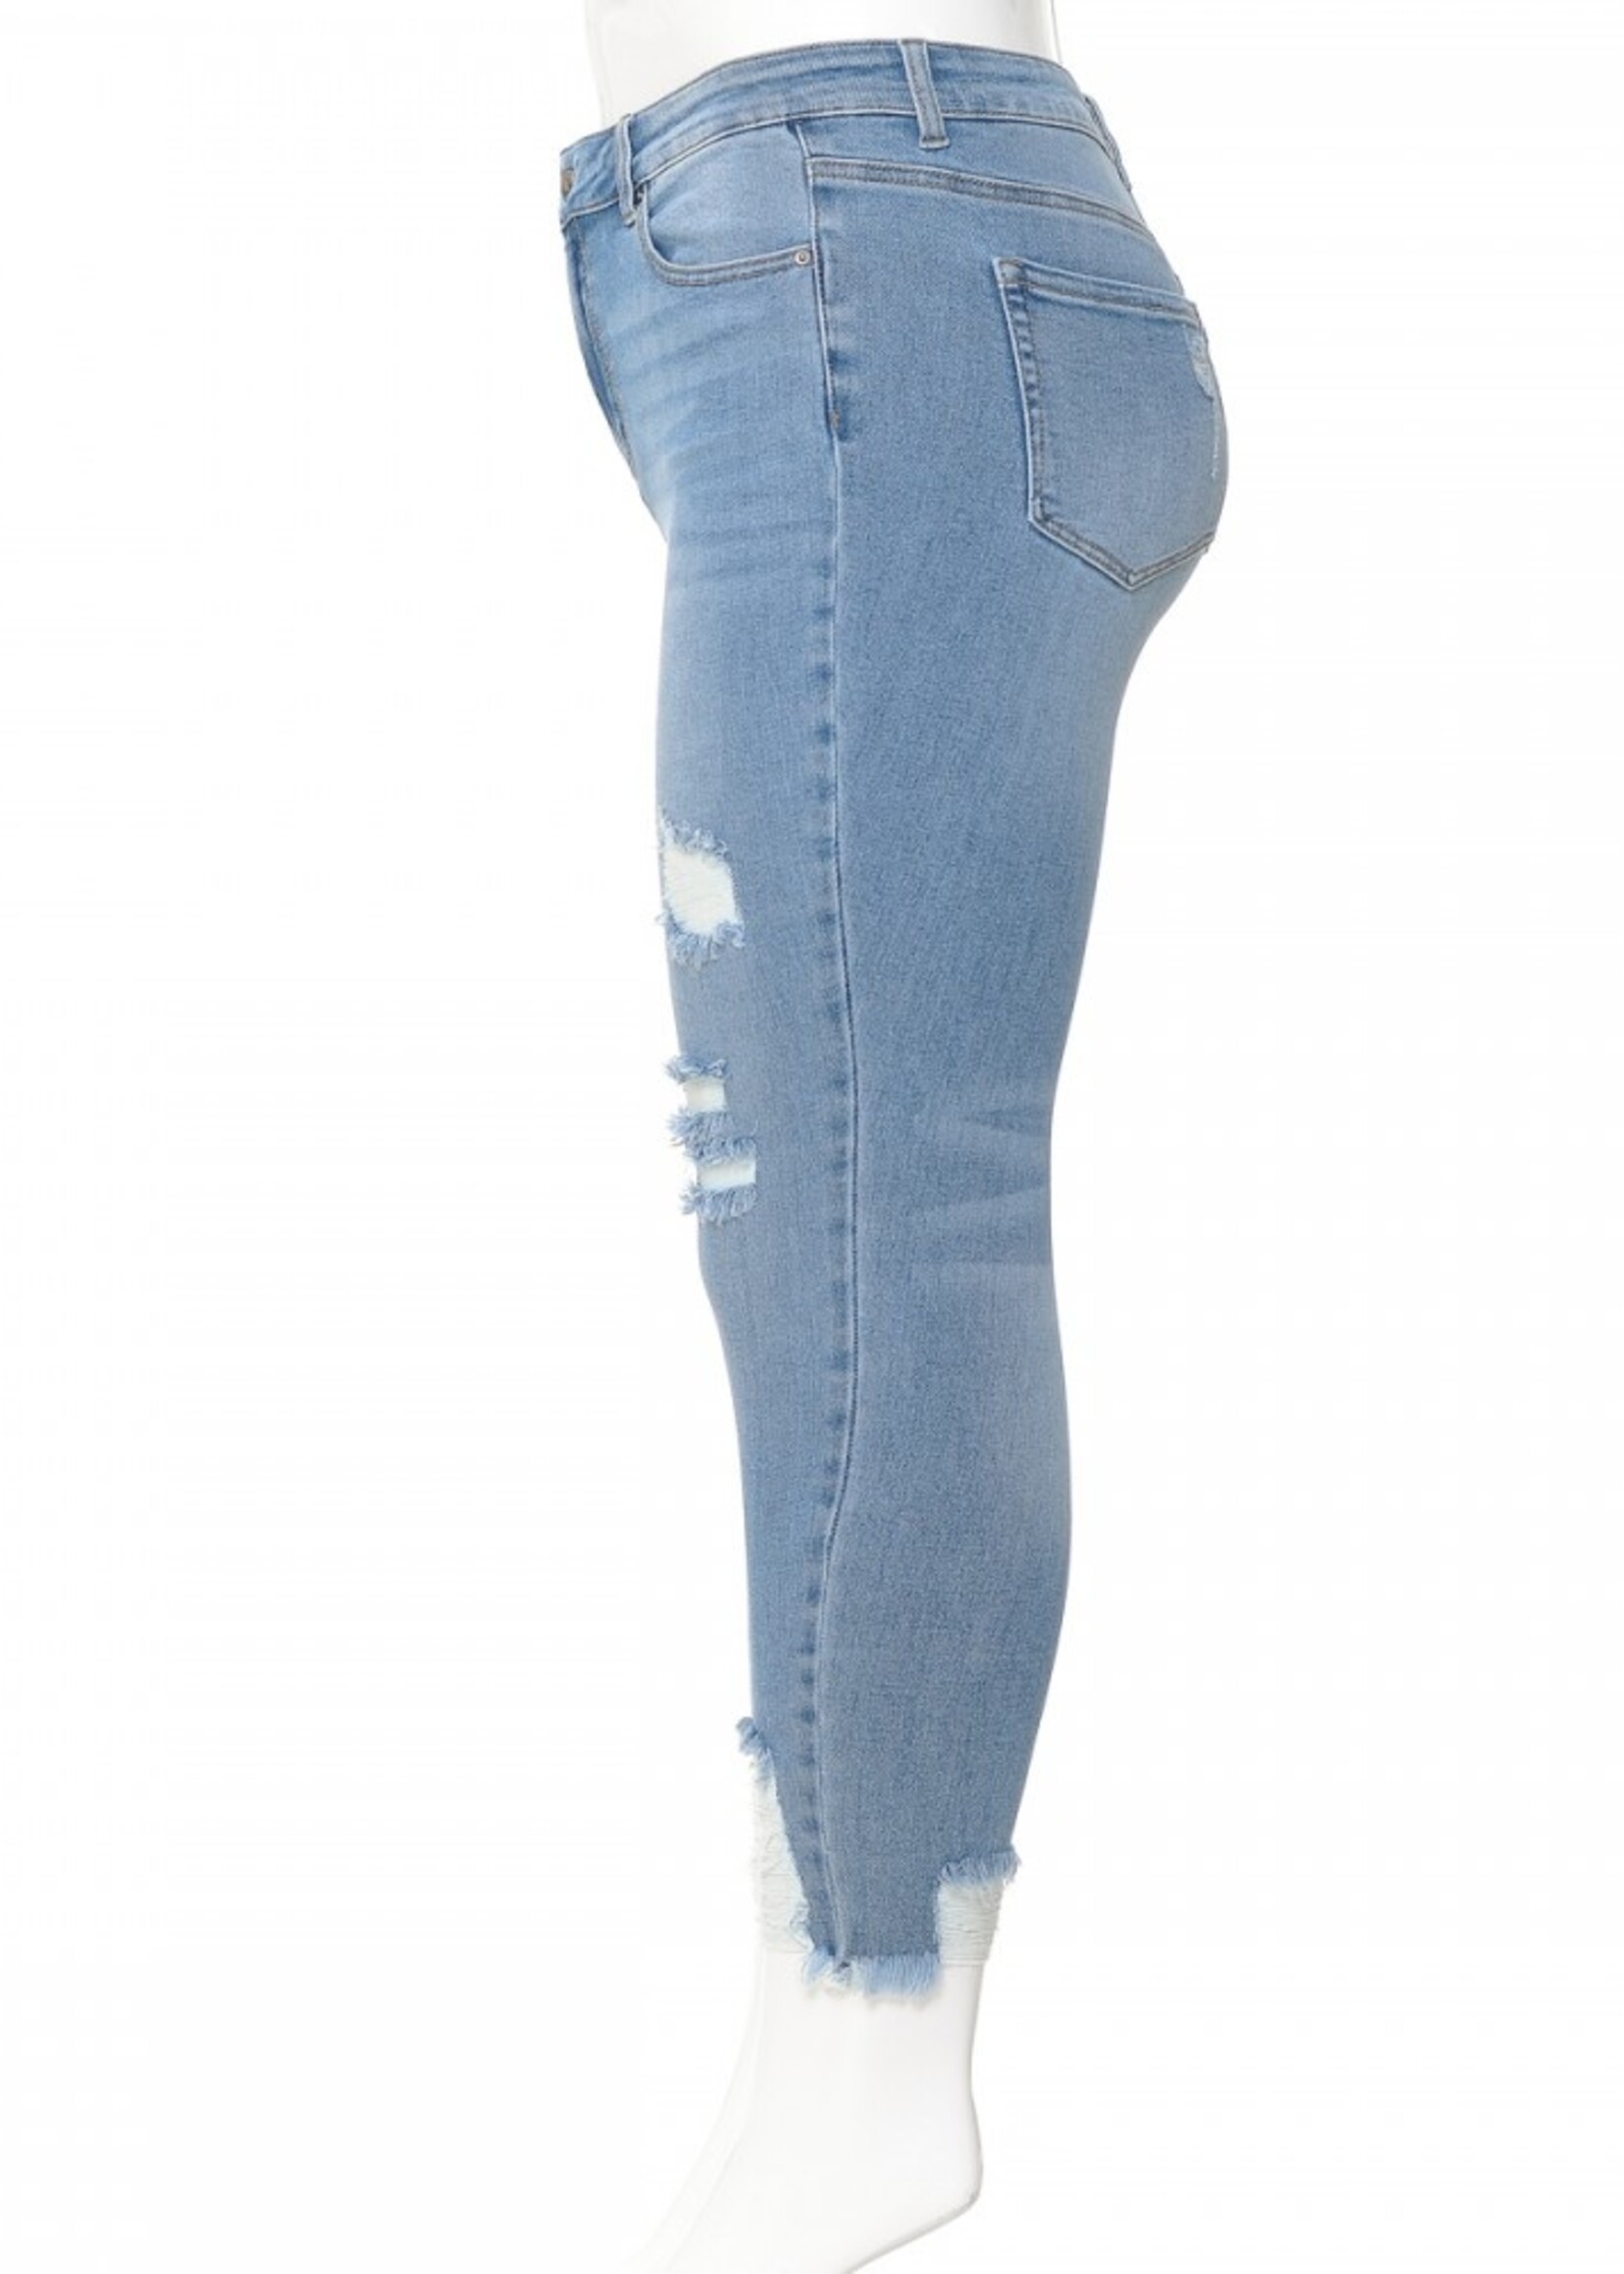 Plus Size WAX Distressed High Waisted Skinny Jeans - Dark Wash